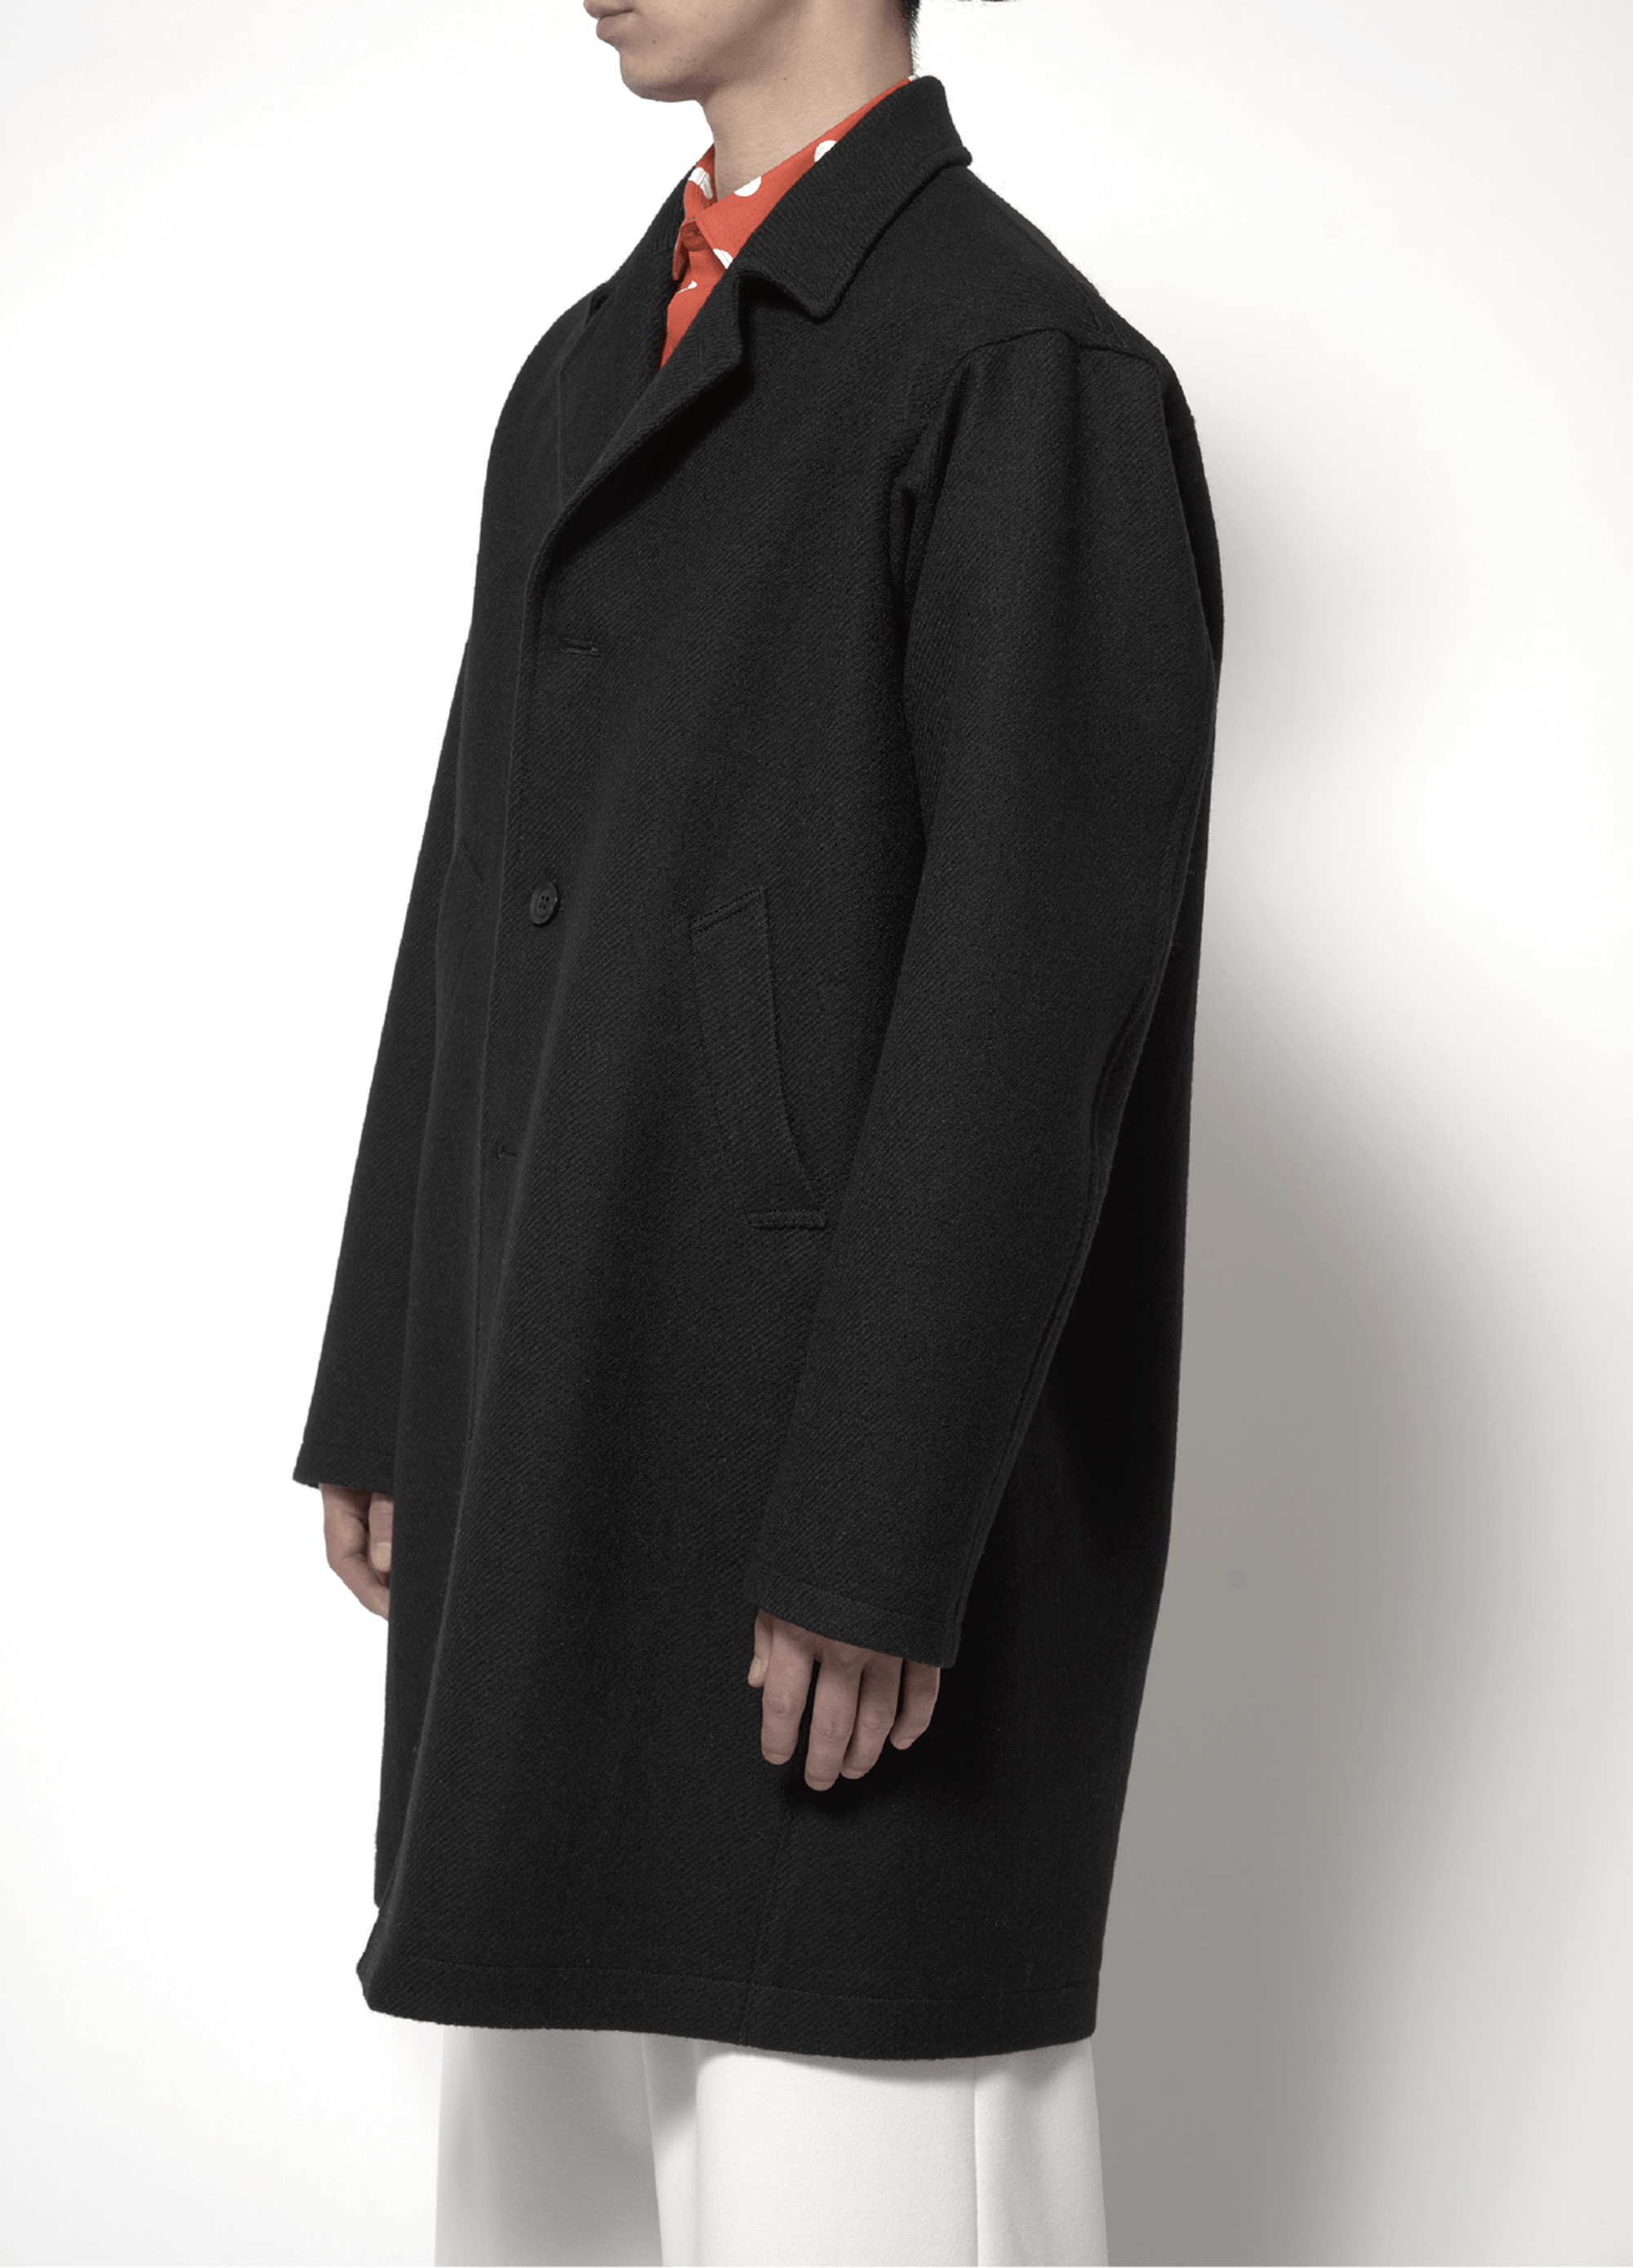 Bal-Collar Coat black tweed